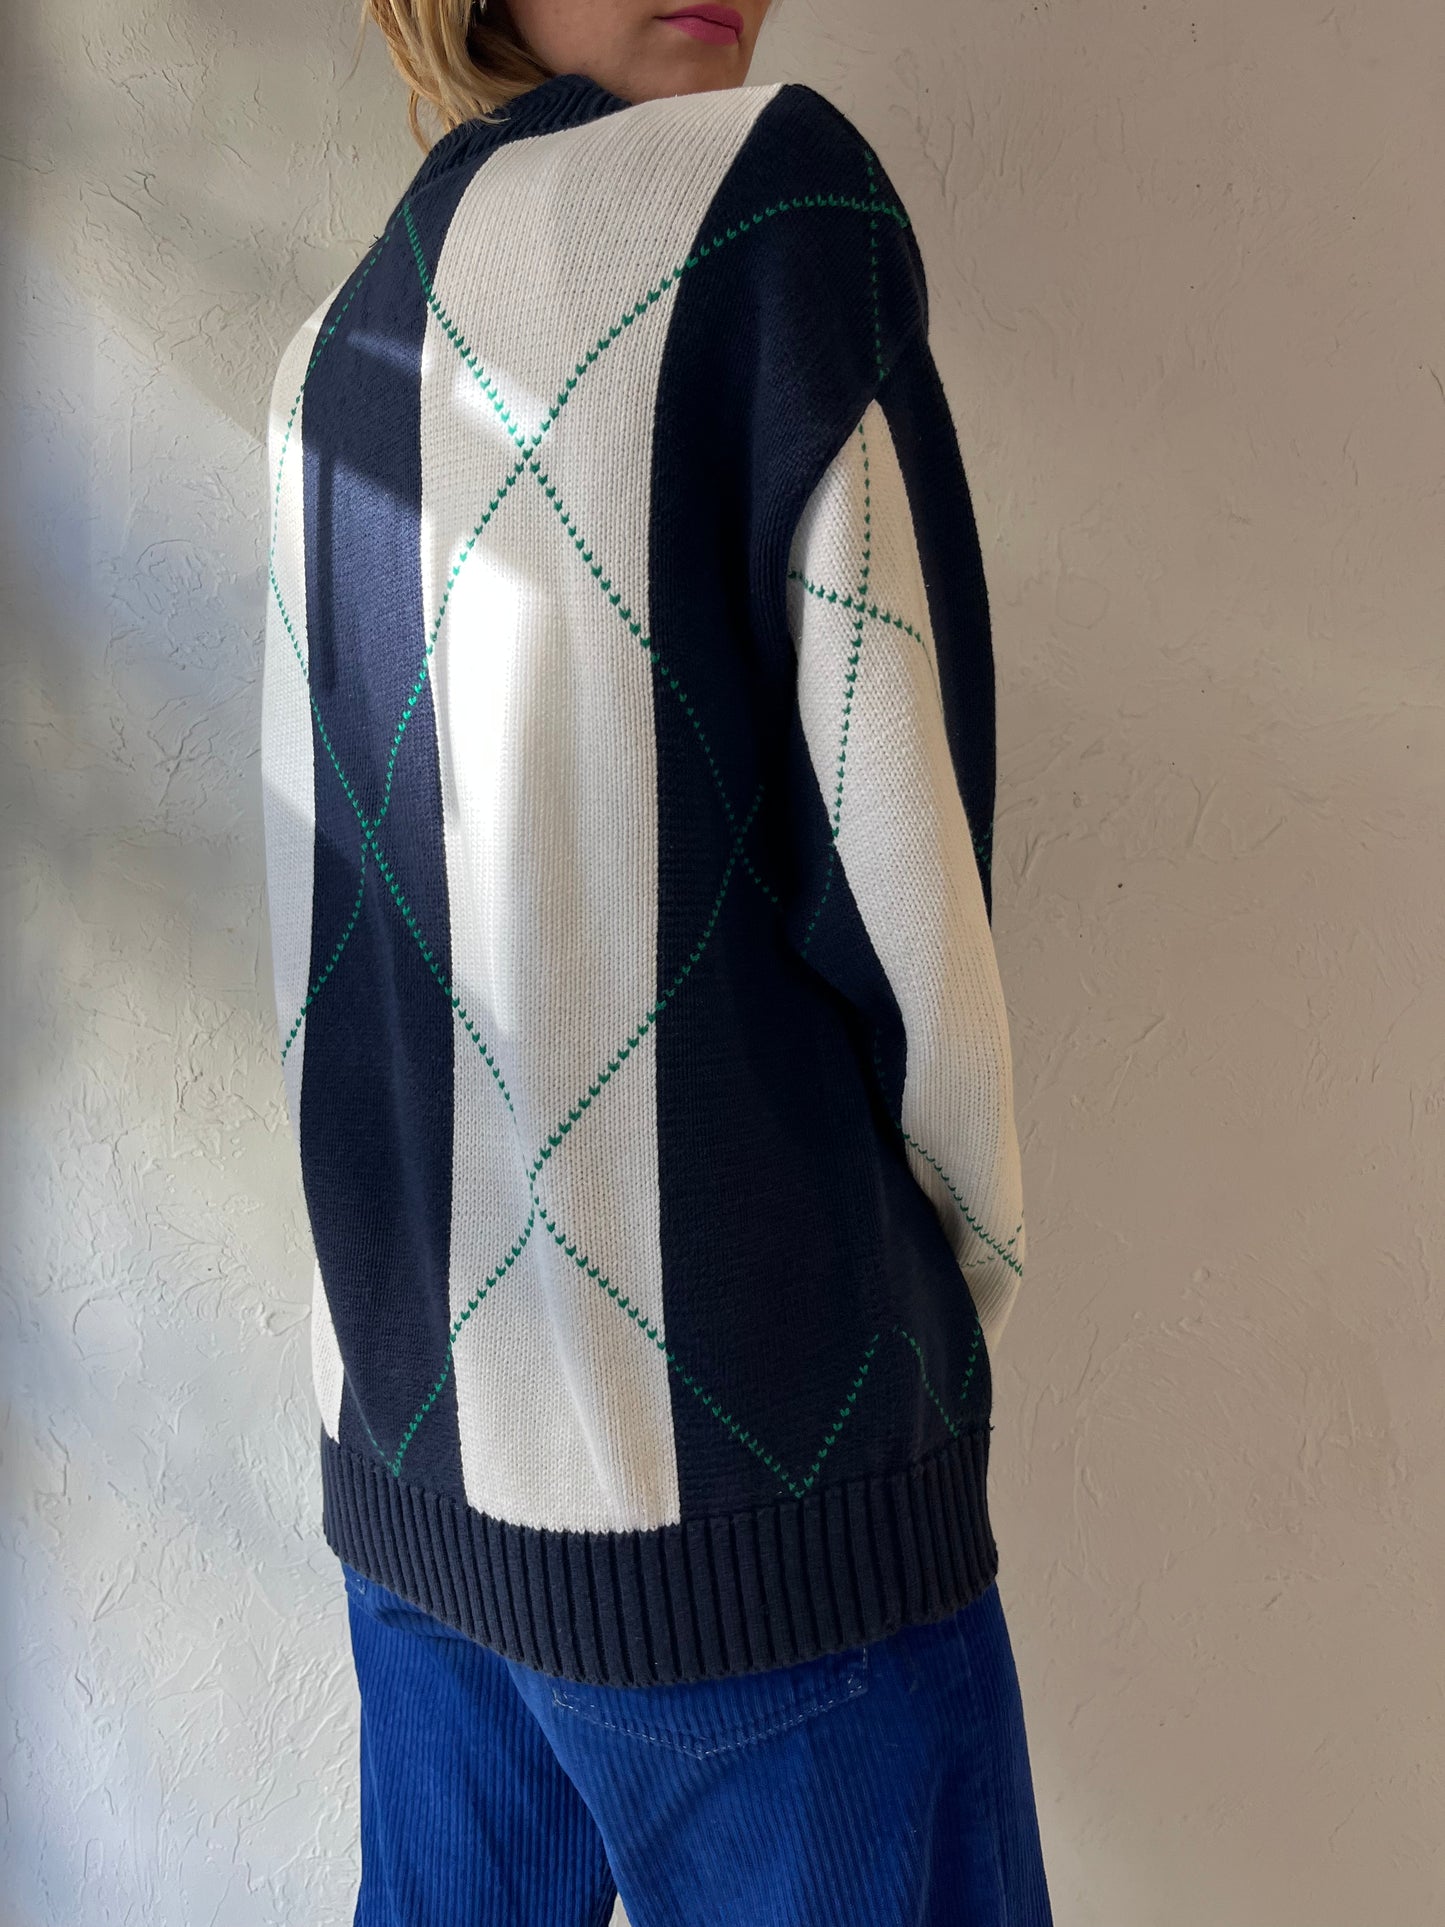 Y2k 'Nautica' Cotton Knit Sweater / Large